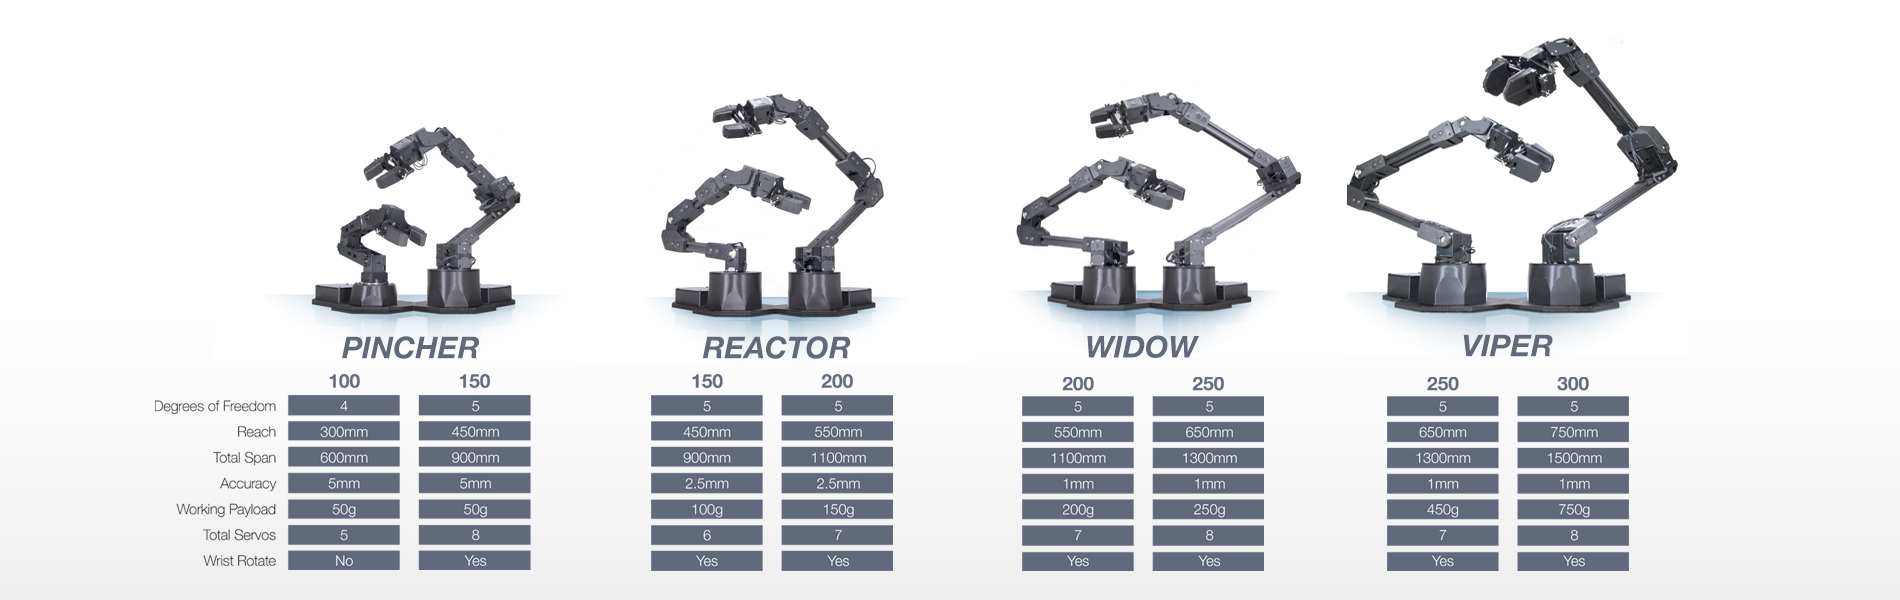 Trossen interbotix robotic arm comparison chart